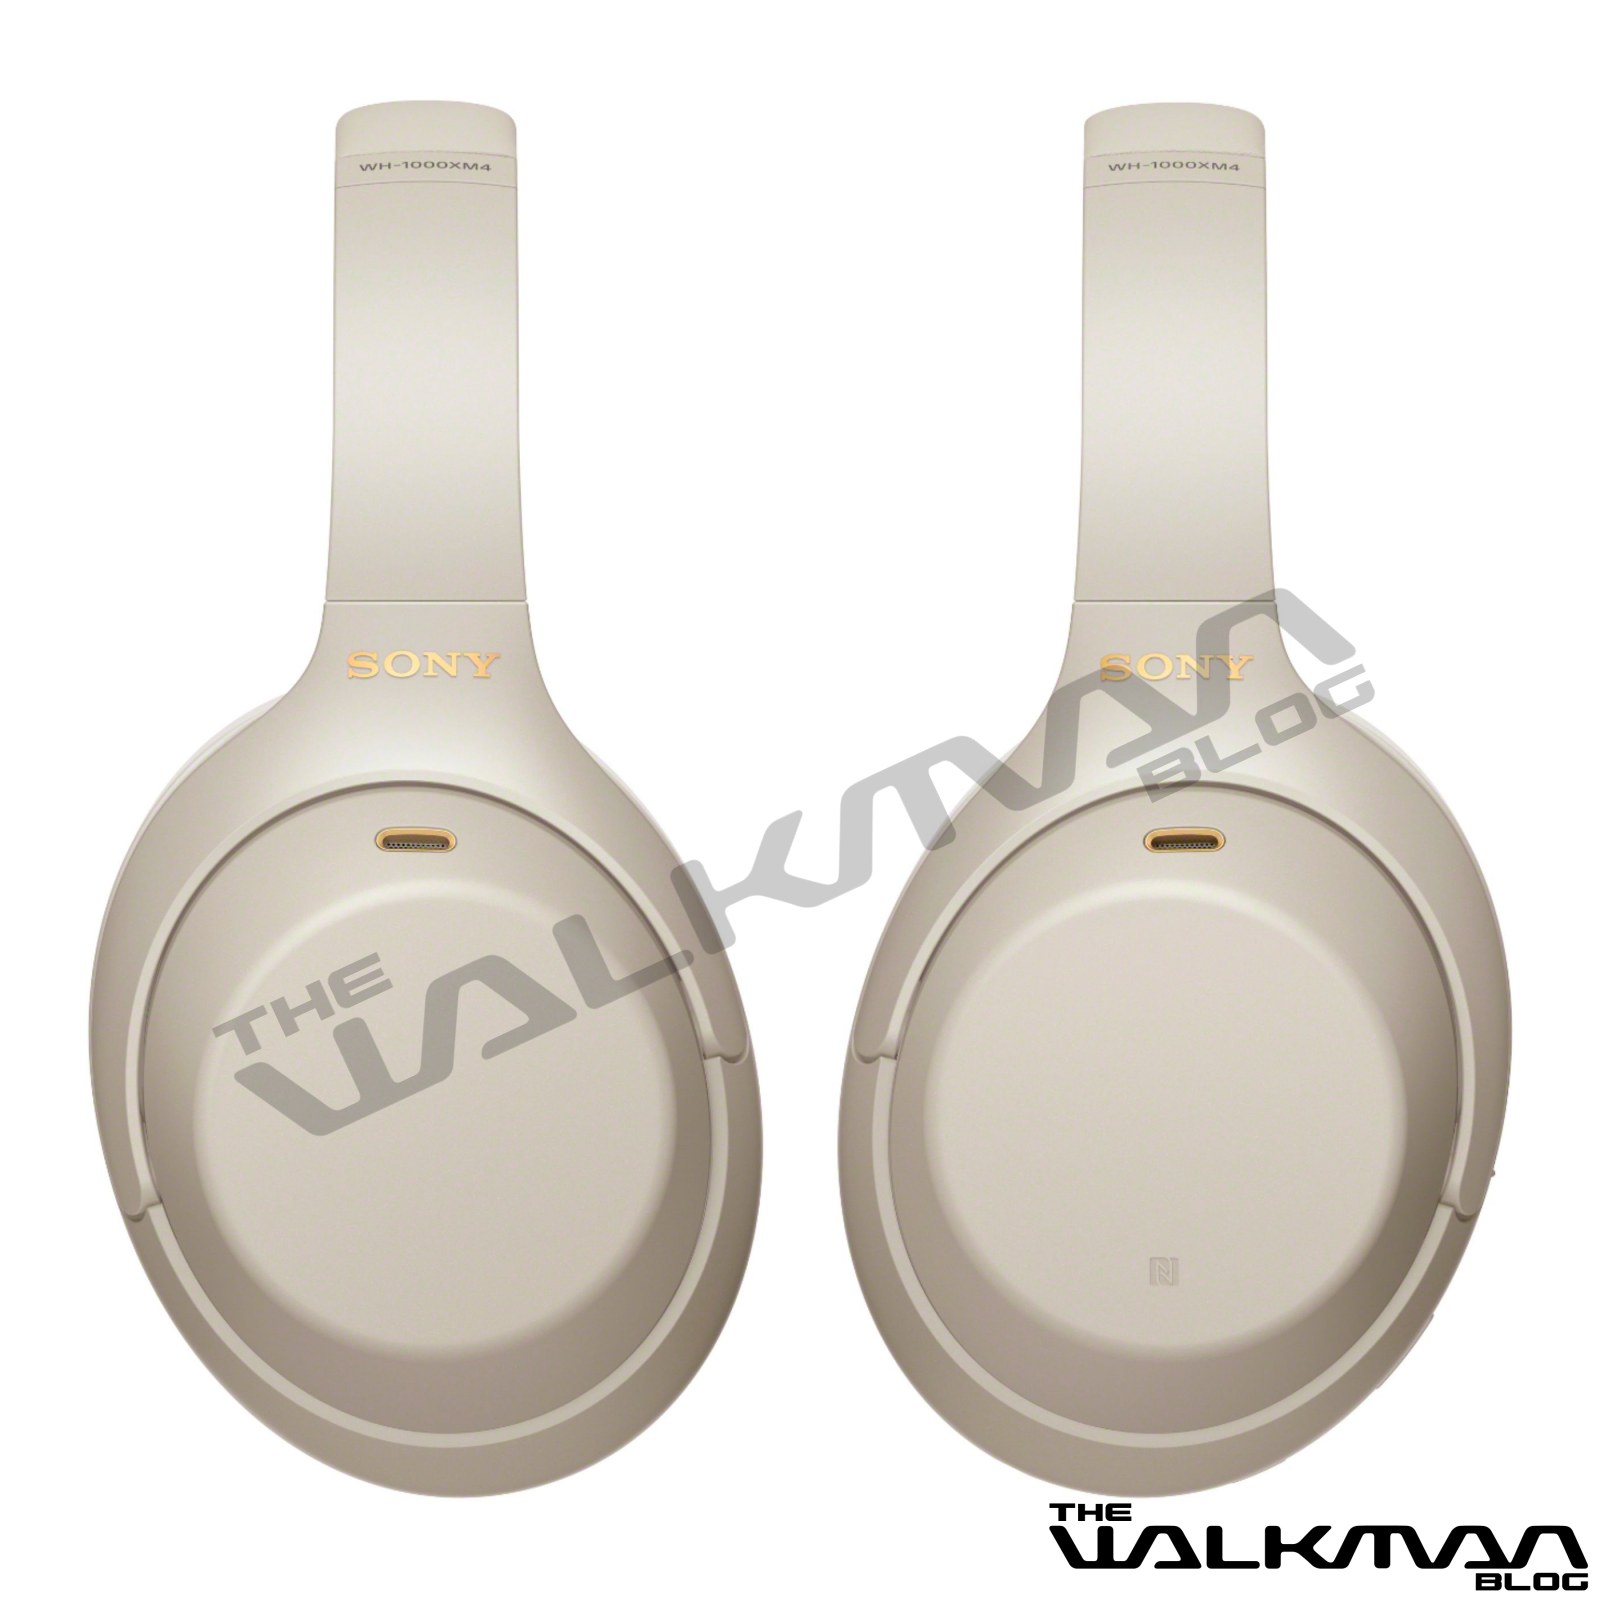 Sony WH-1000XM4 Leaked by Best Buy (update 4) - The Walkman Blog